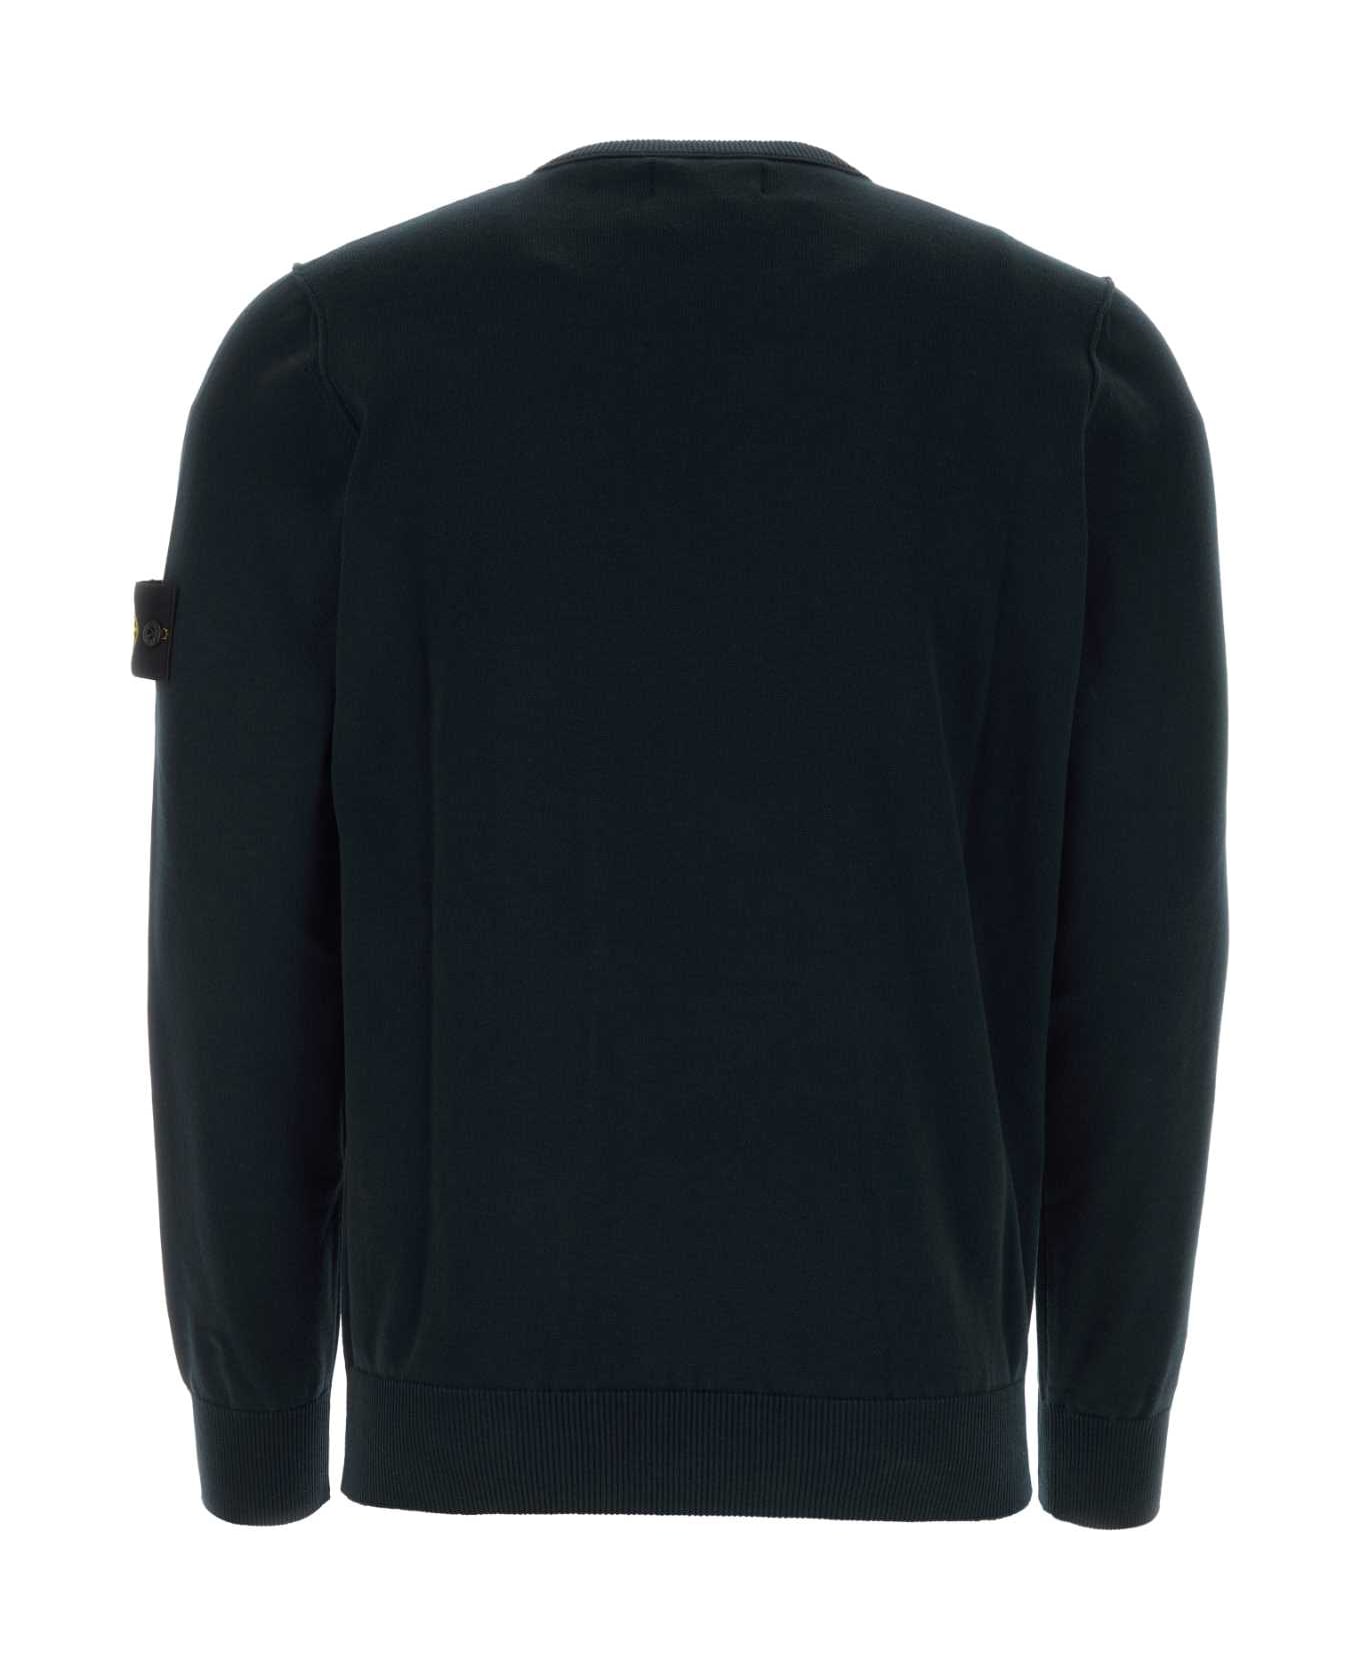 Stone Island Black Cotton Sweater - BLK